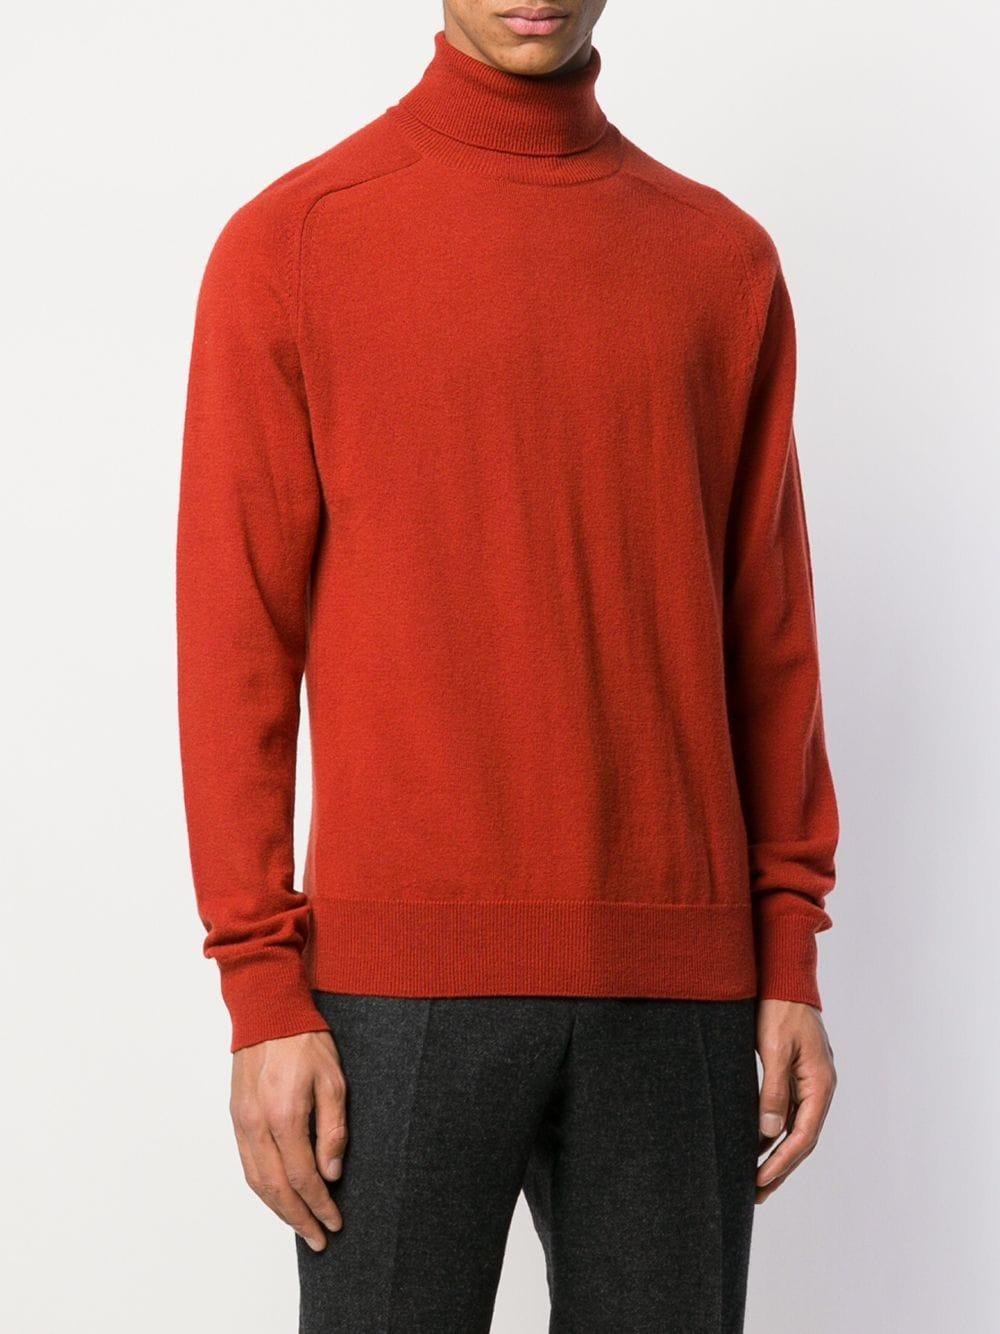 AMI Turtleneck Sweater in Orange for Men - Lyst